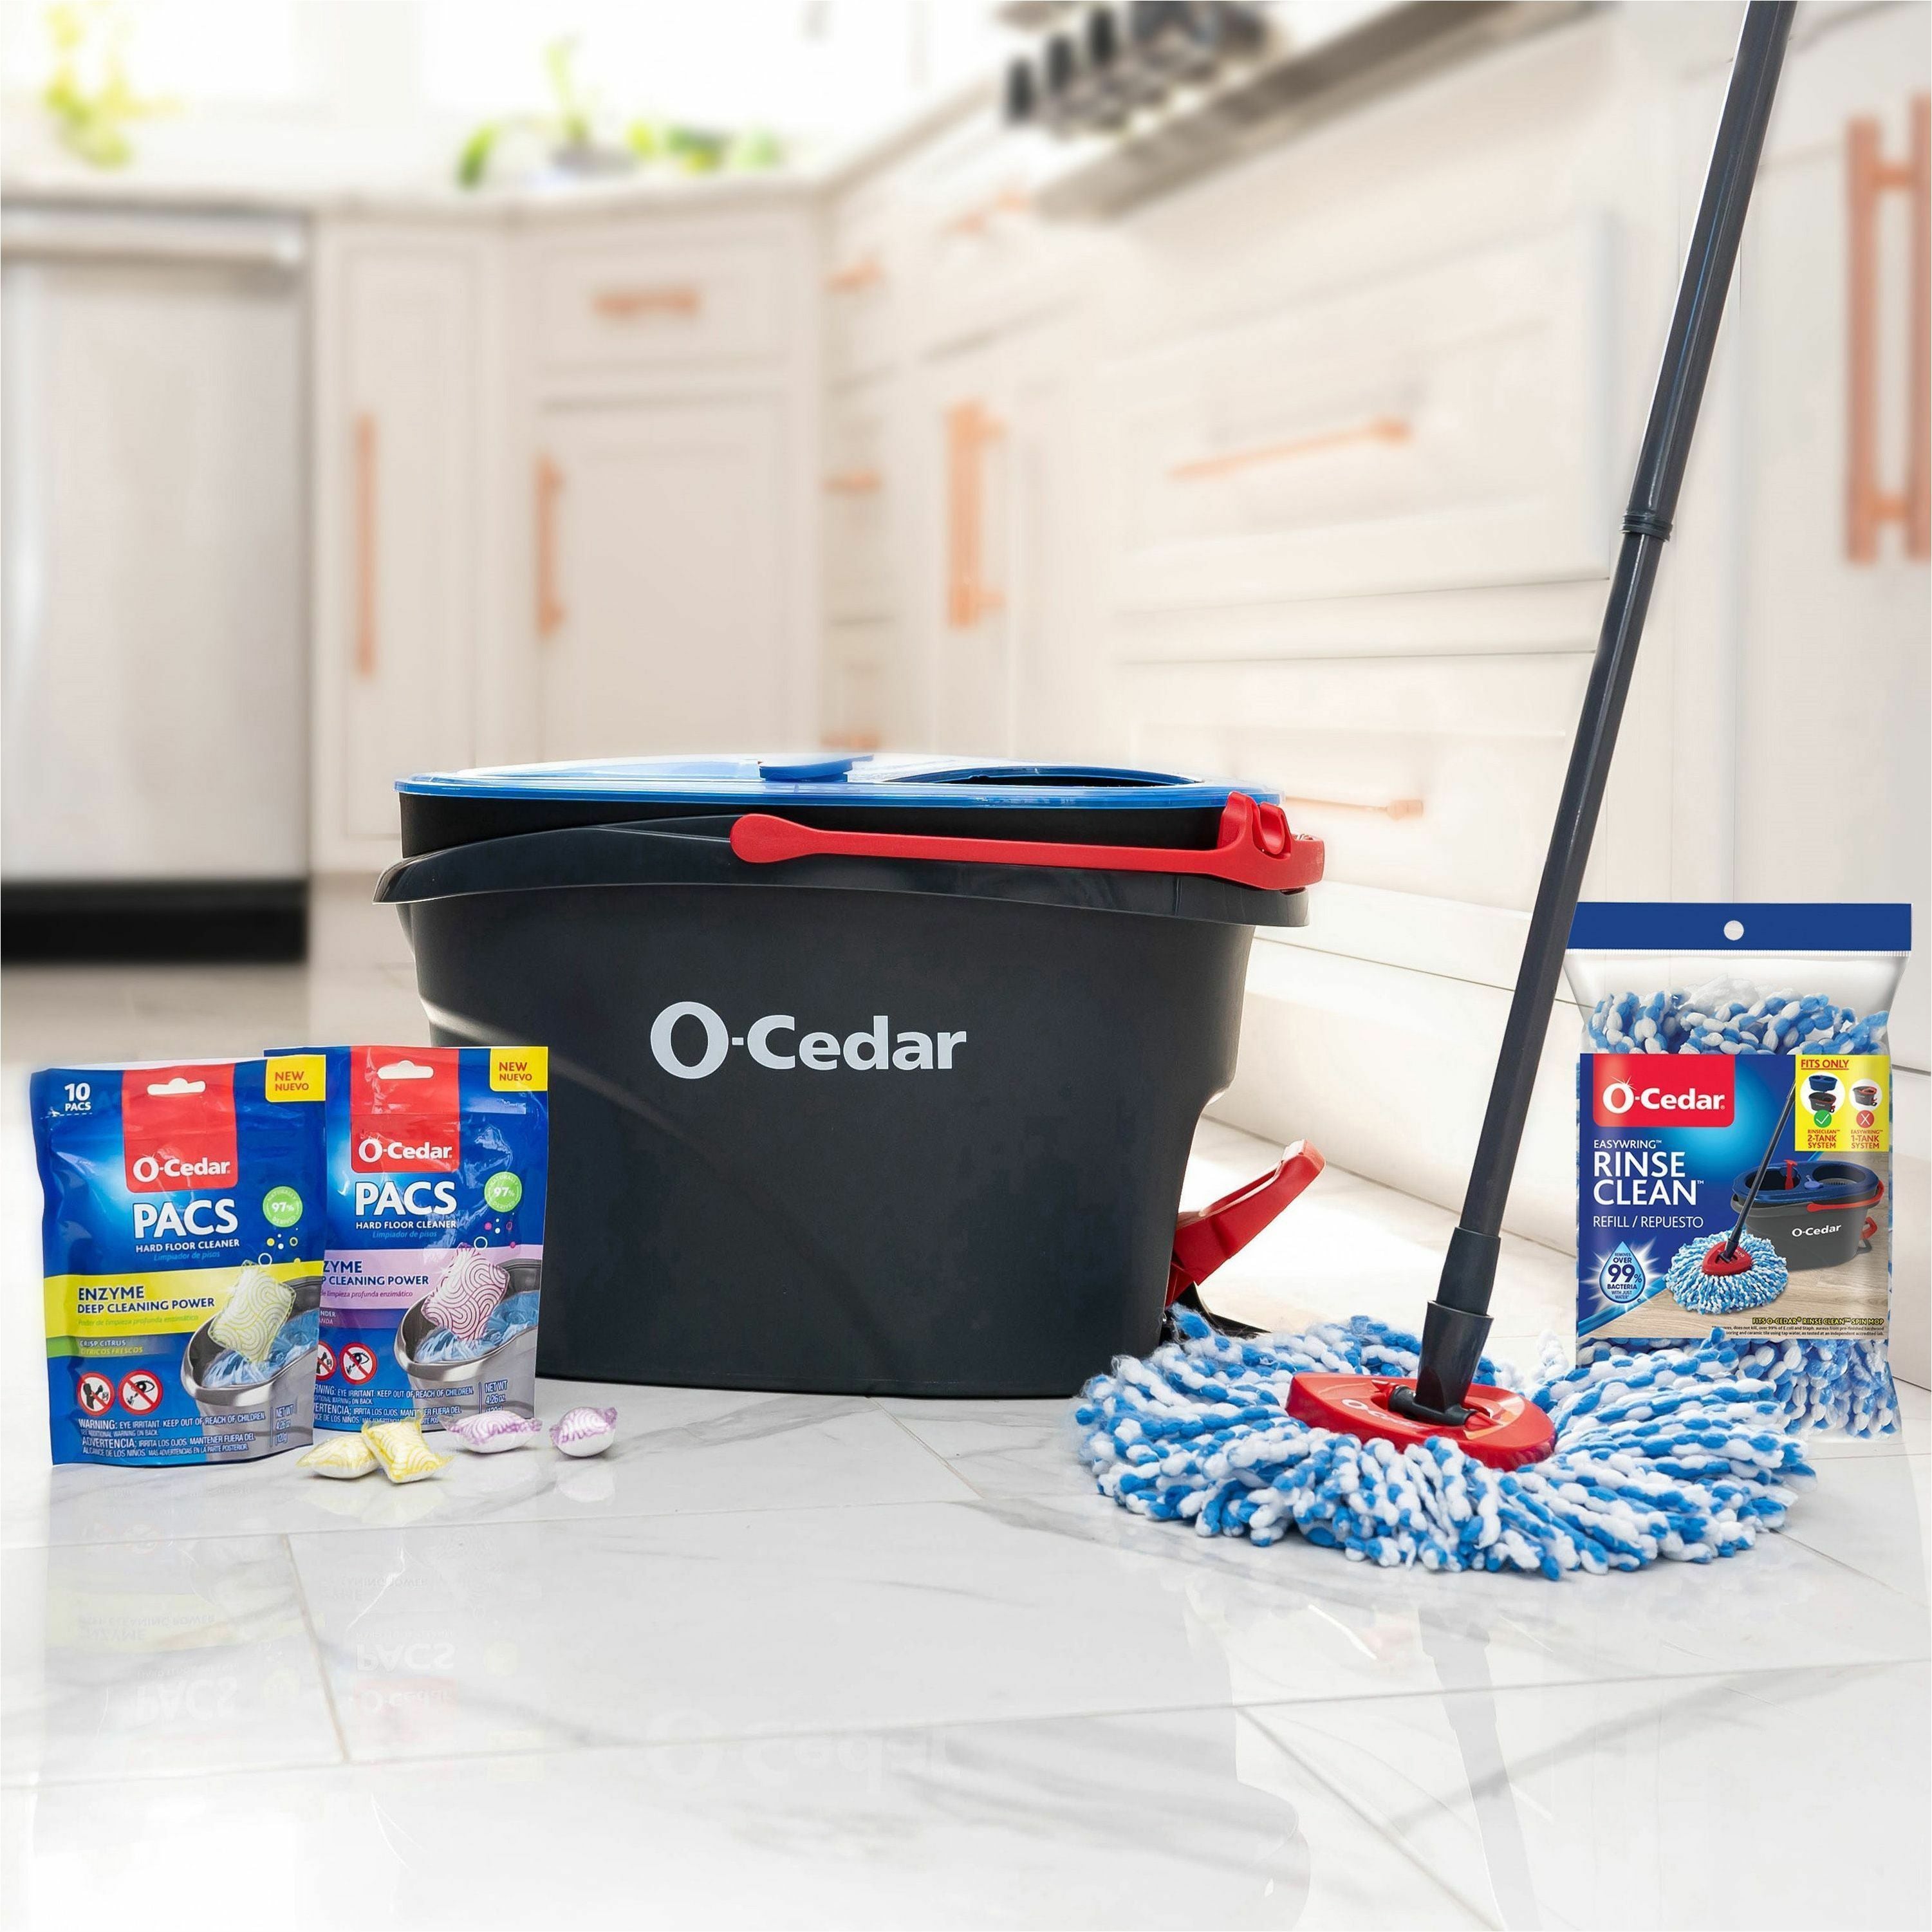 O-Cedar EasyWring Rinse Clean Mop Refill - MicroFiber - Multi - 2 / Pack - 2